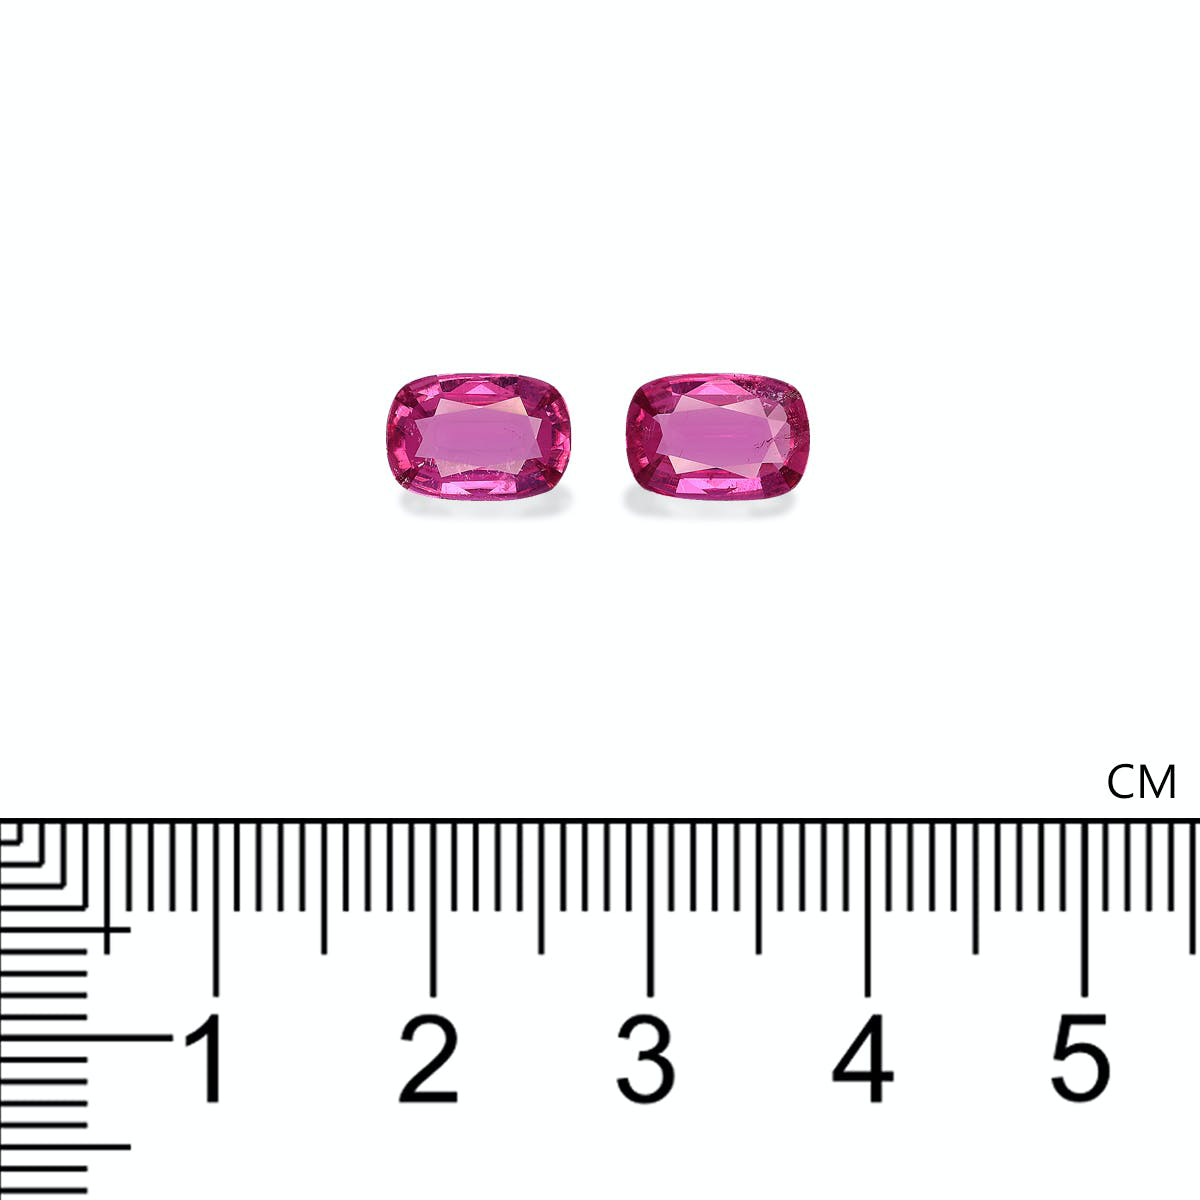 Fuscia Pink Rubellite Tourmaline 2.11ct - 8x6mm Pair (RL1287)